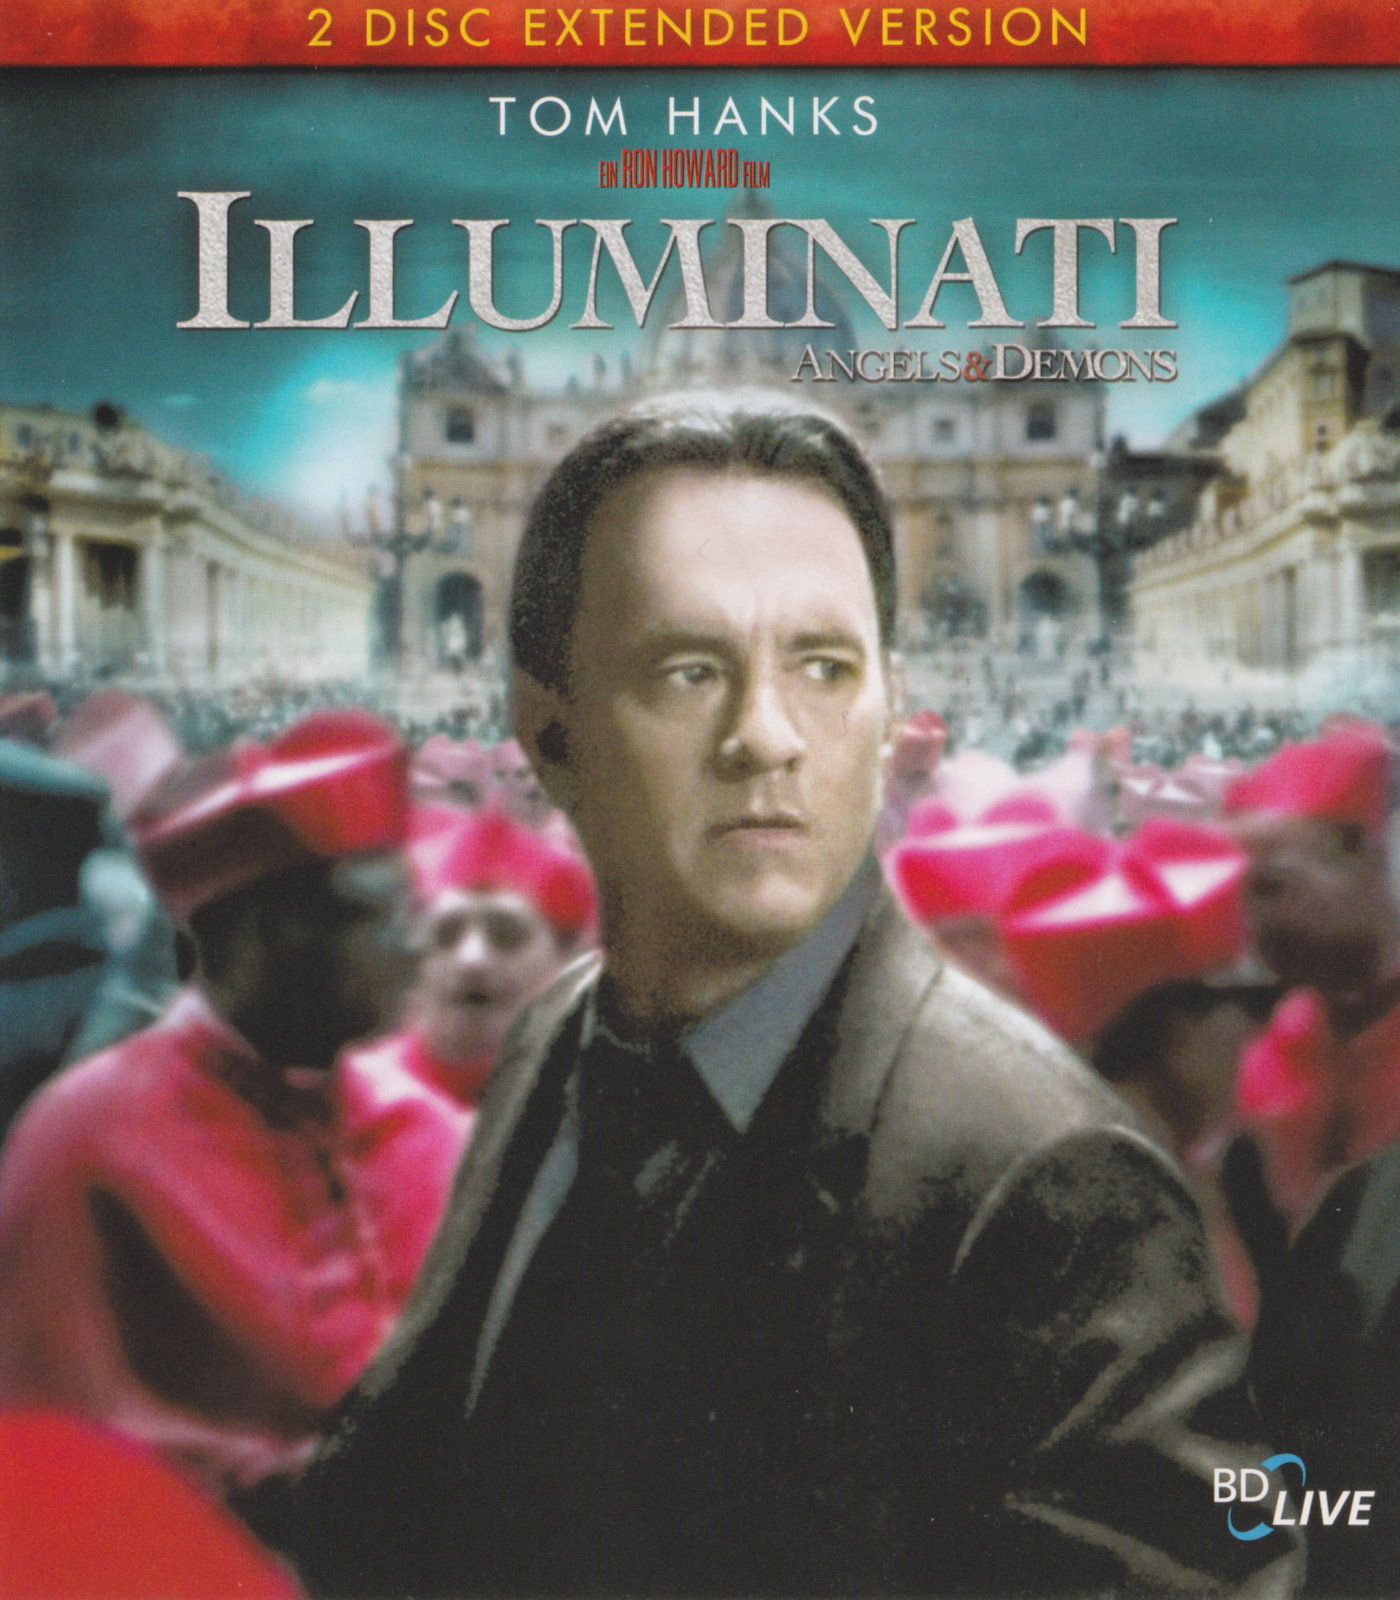 Cover - Illuminati - Angles & Demons.jpg